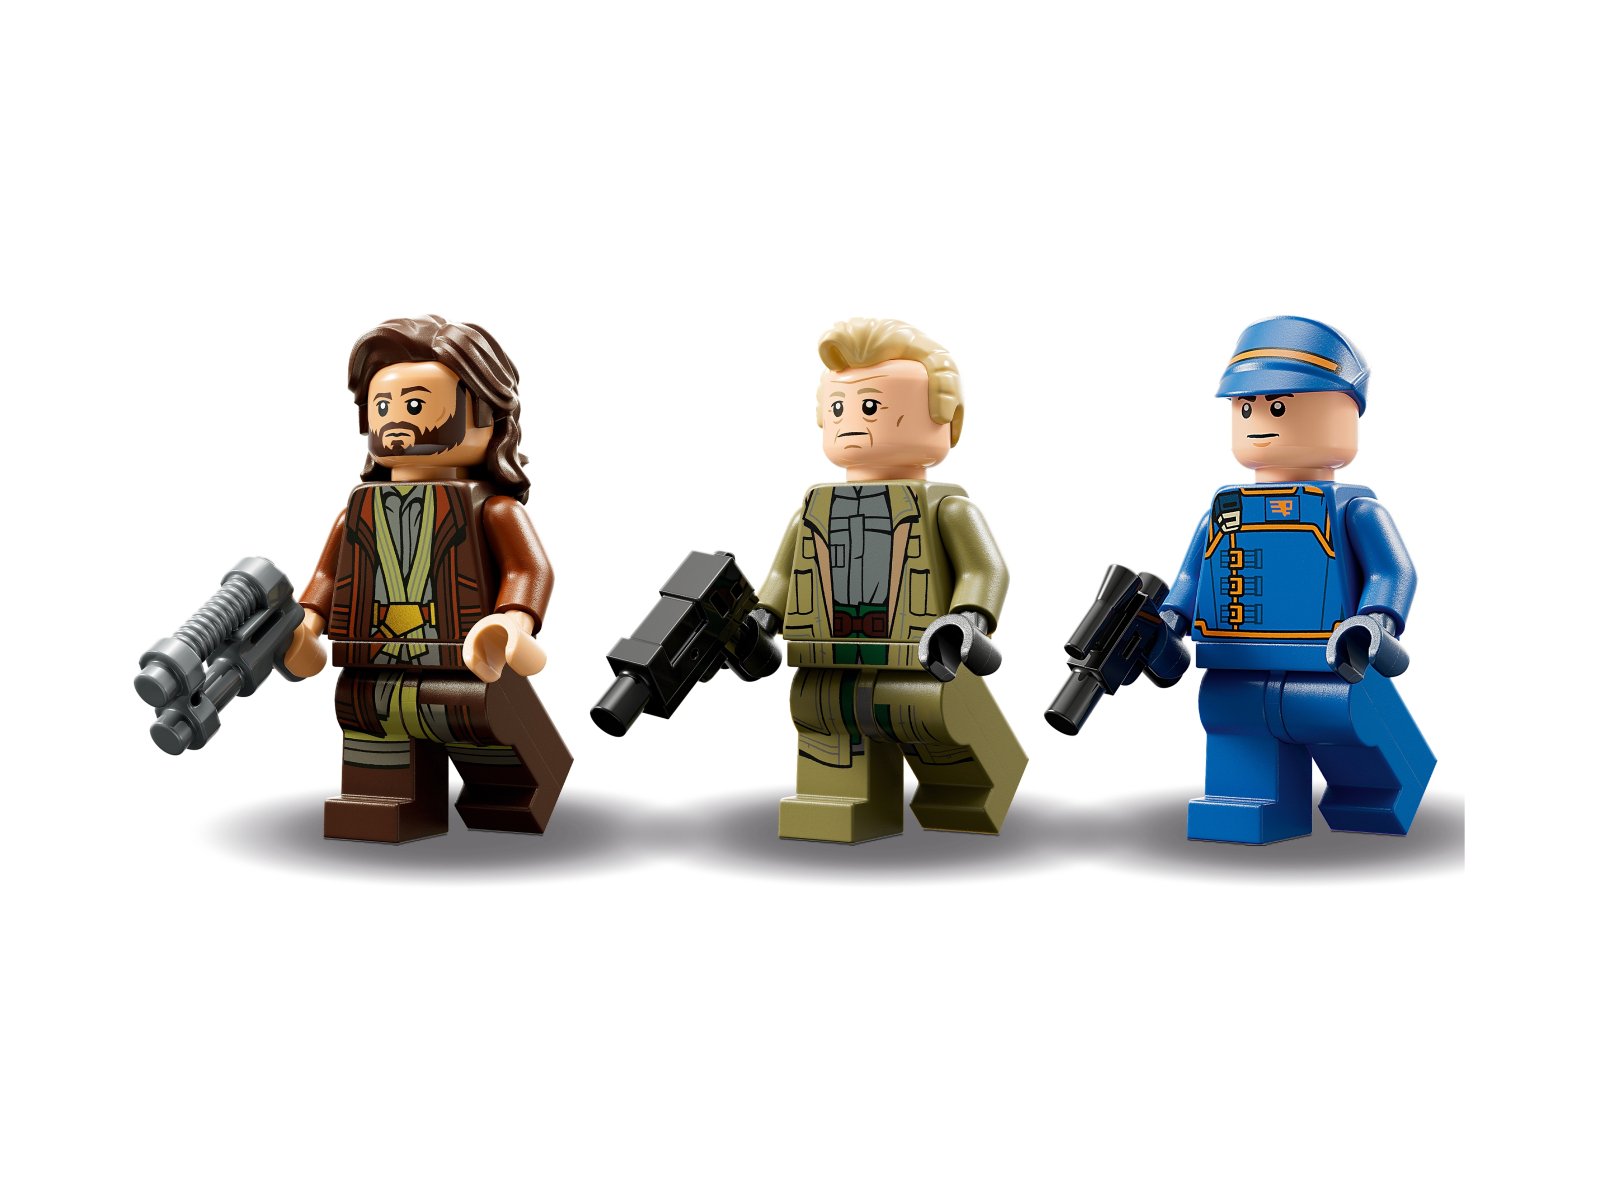 LEGO Star Wars Zasadzka na Ferrix™ 75338